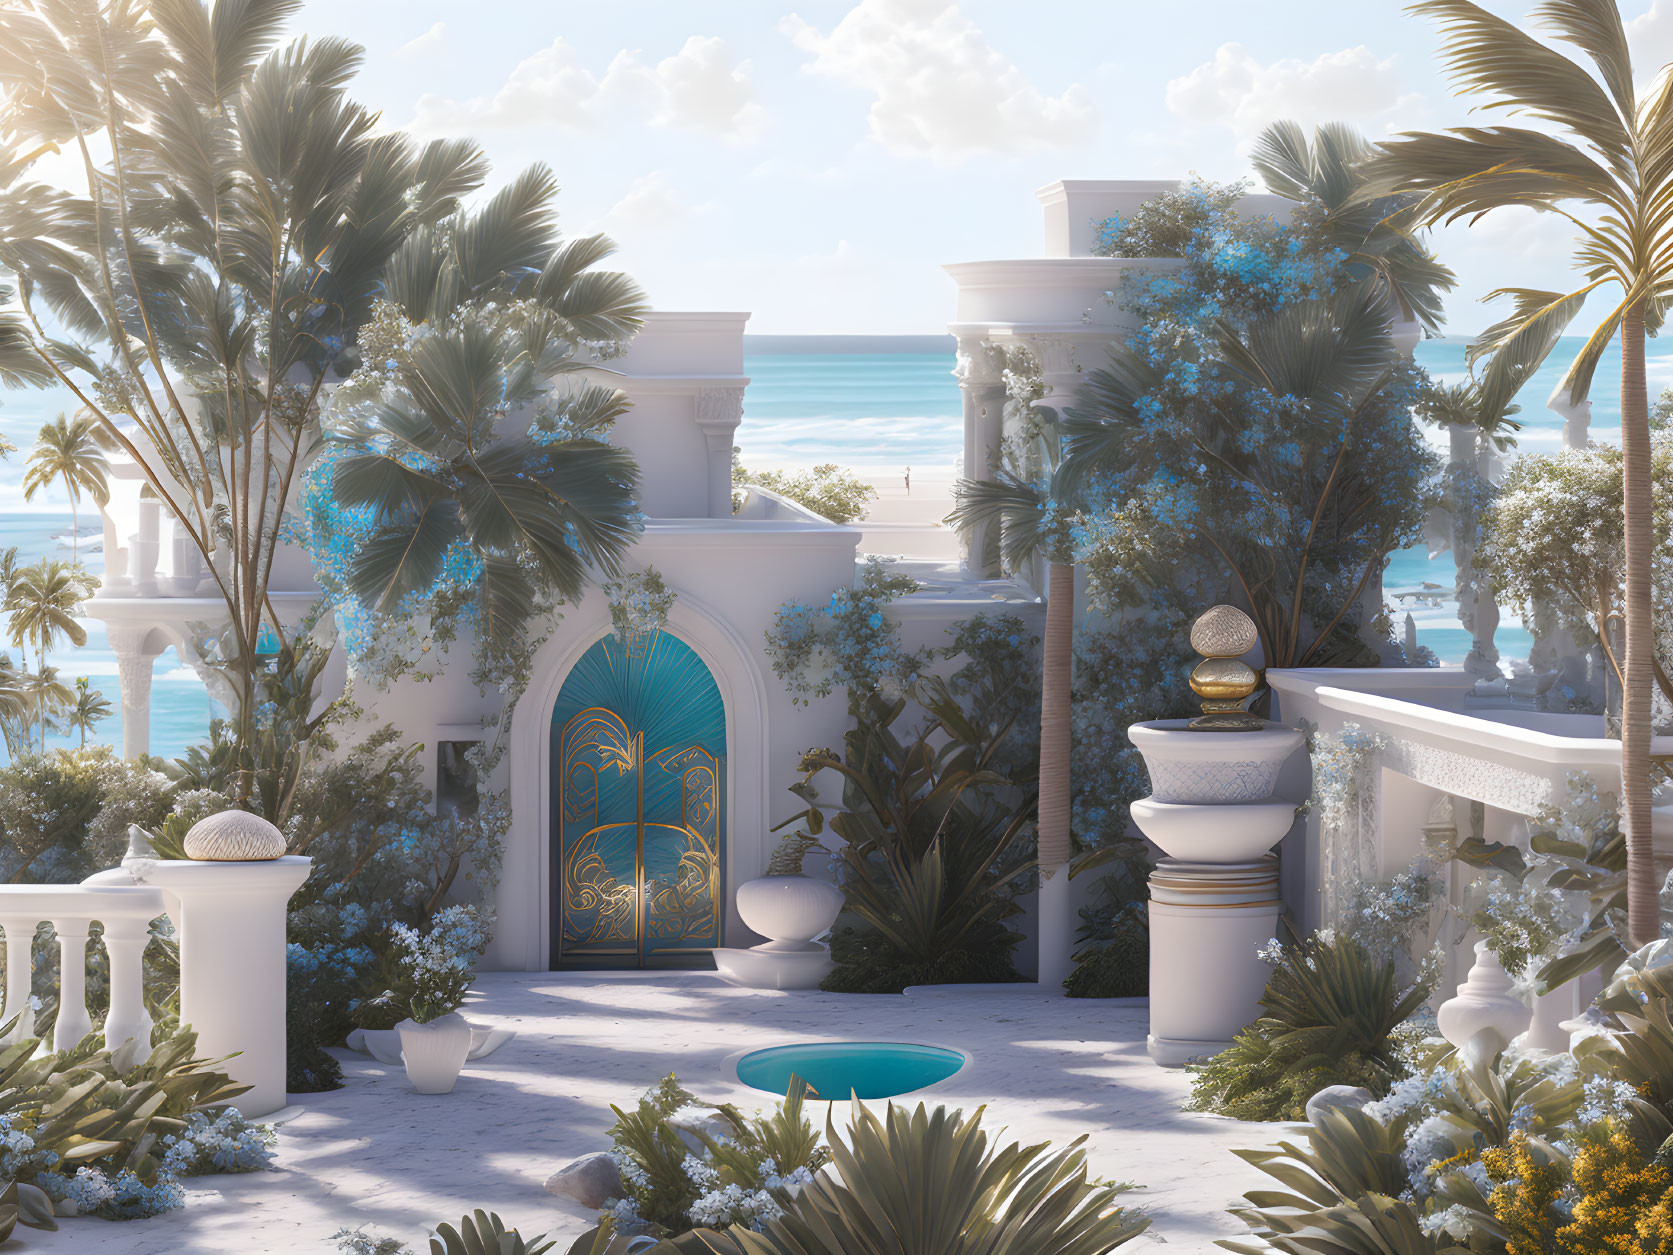 Luxurious White Villa Surrounded by Palm Trees on Coastal Scene